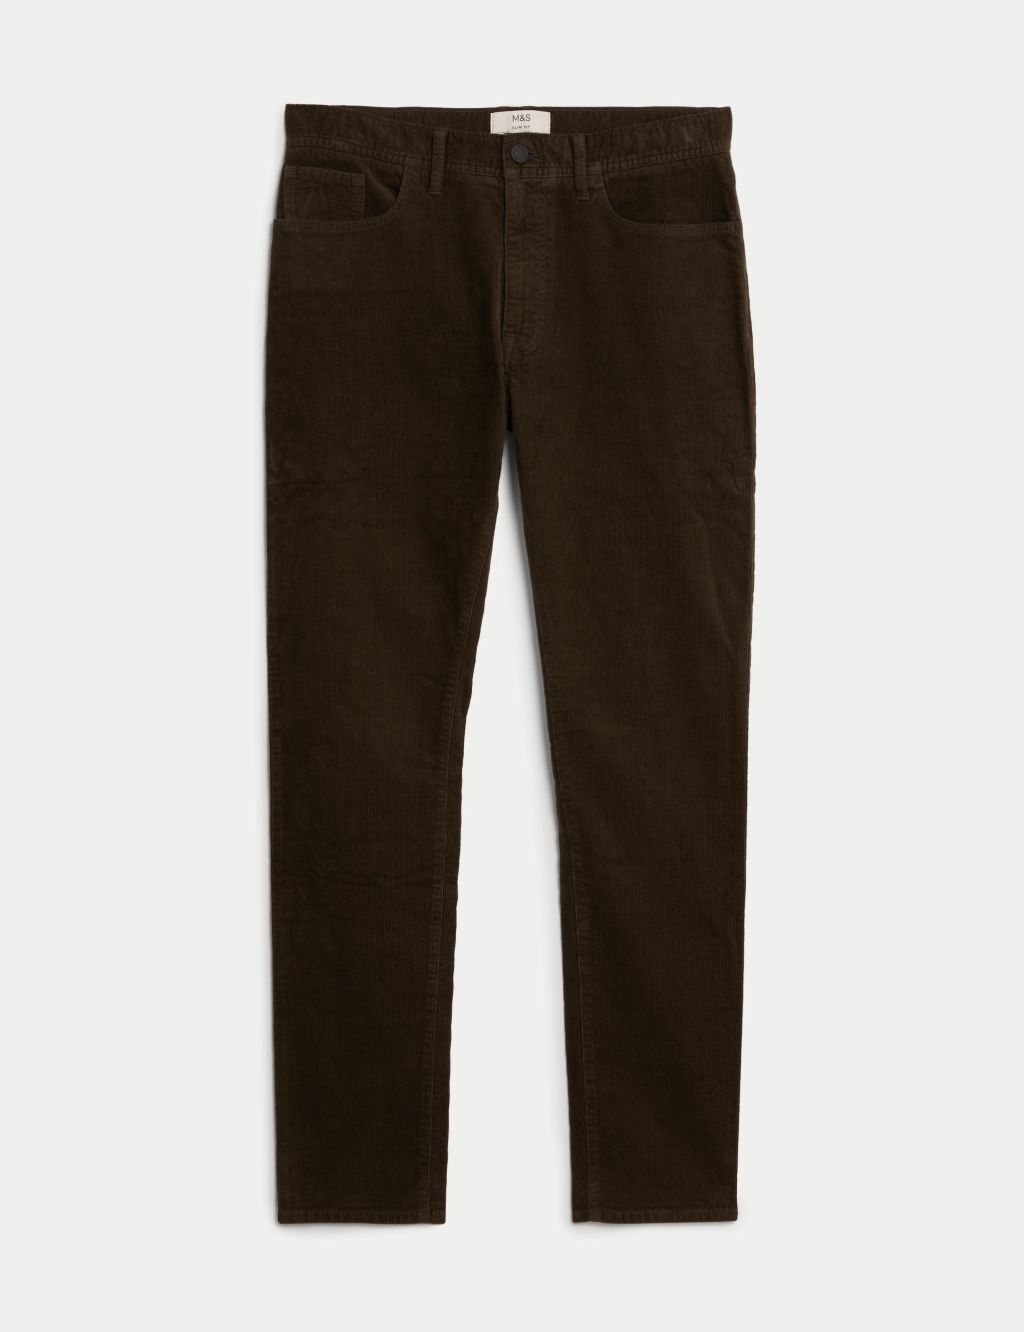 Slim Fit Corduroy 5 Pocket Trousers image 2